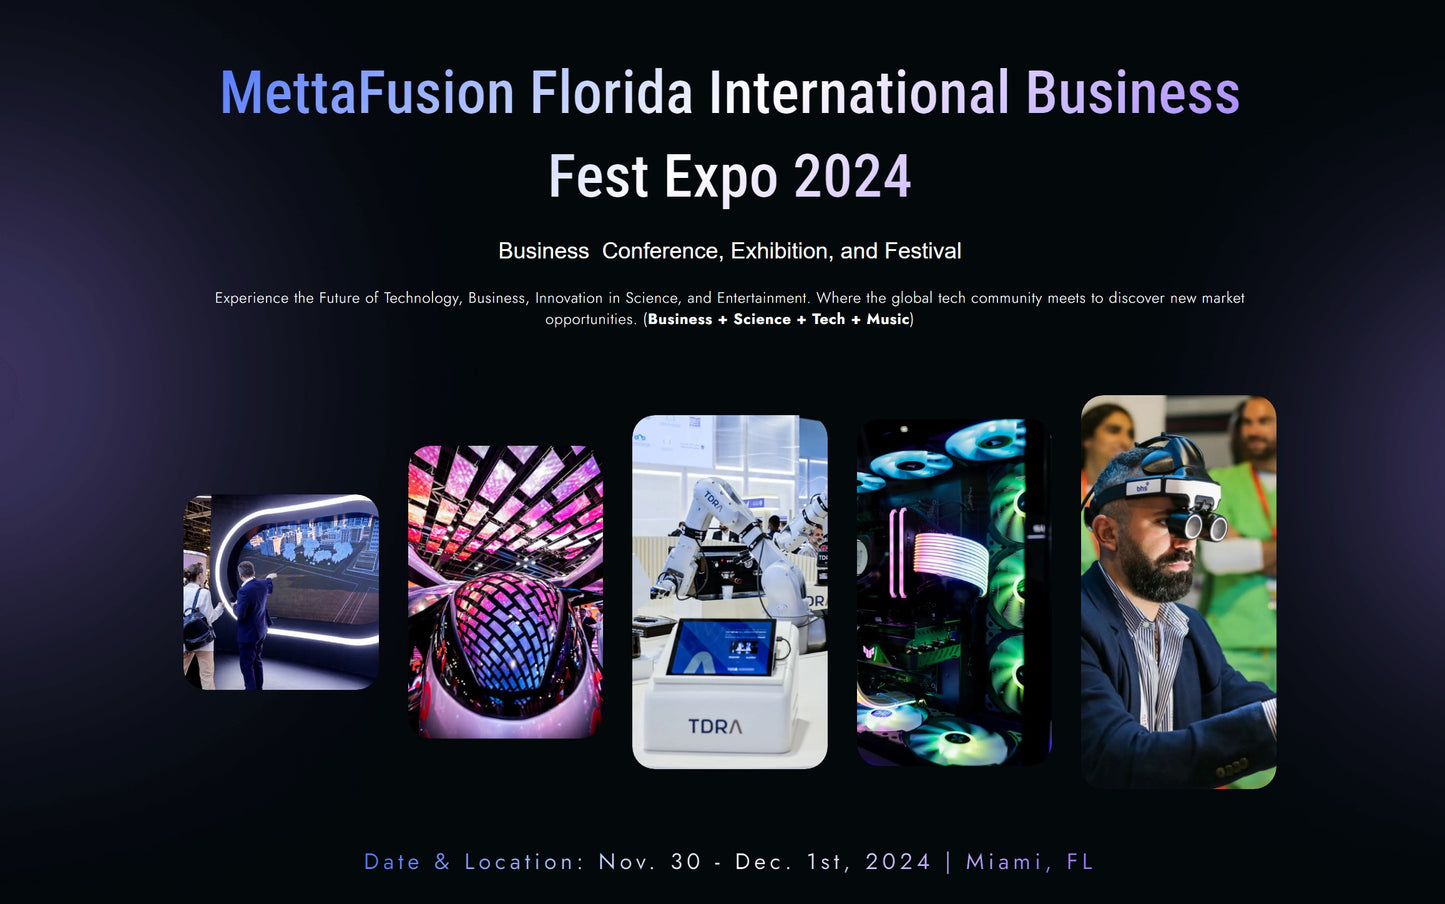 MettaFusion International Business Fest